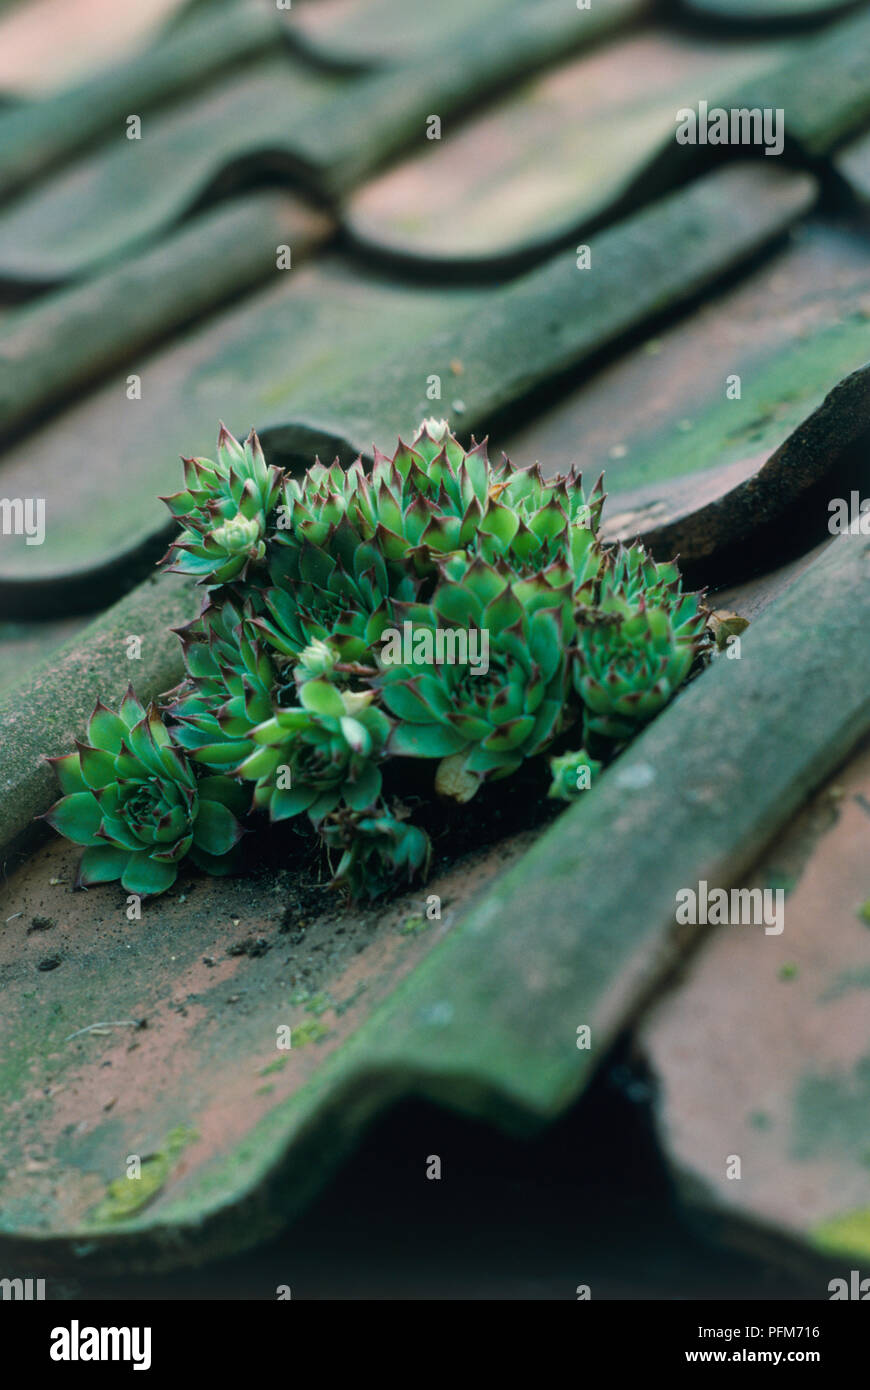 Sempervivum sp. (Houseleek) growing on roof tile Stock Photo